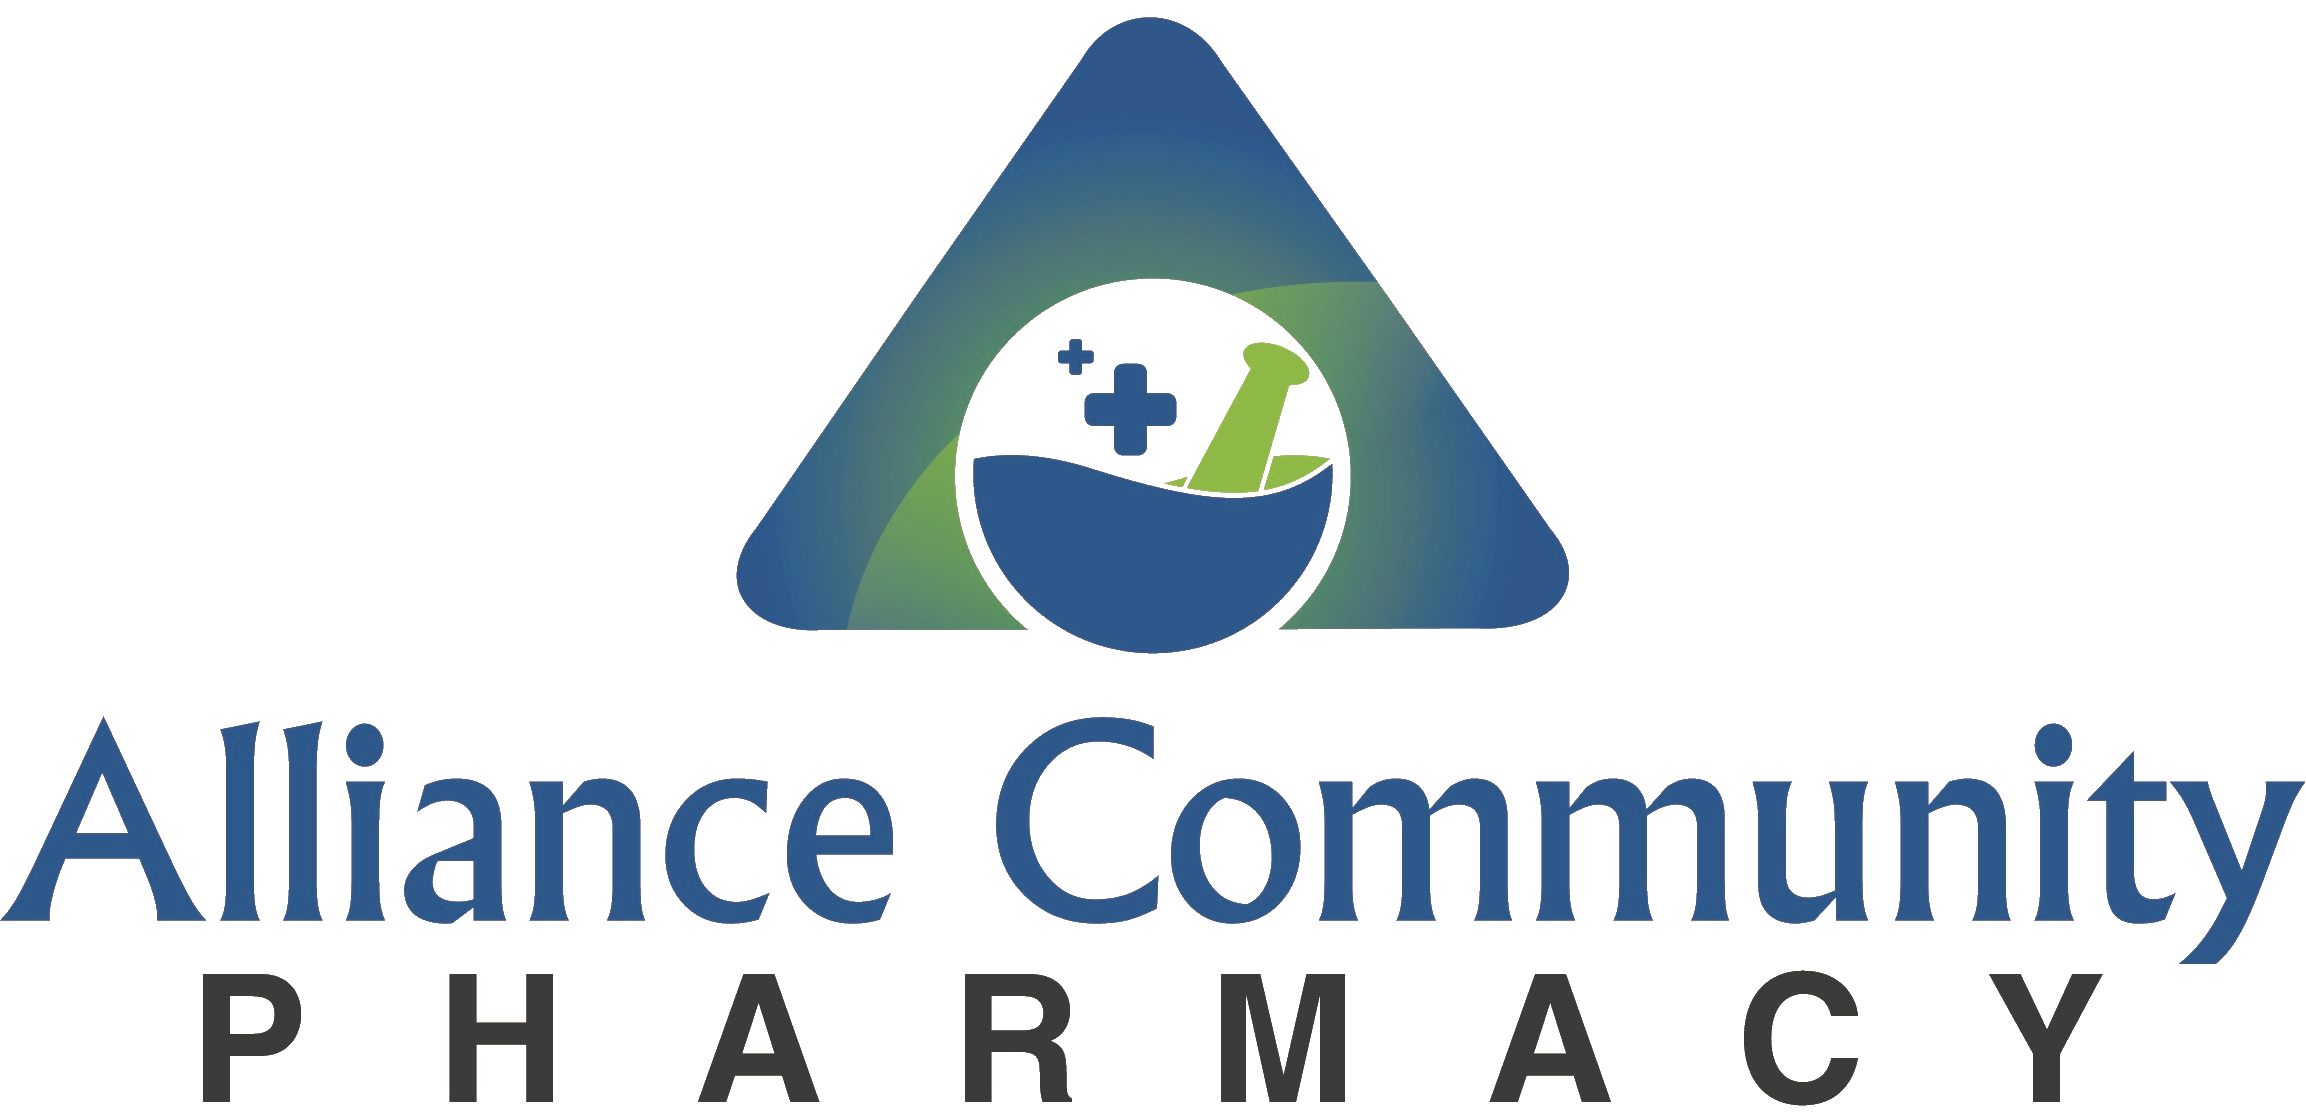 Alliance Community Pharmacy